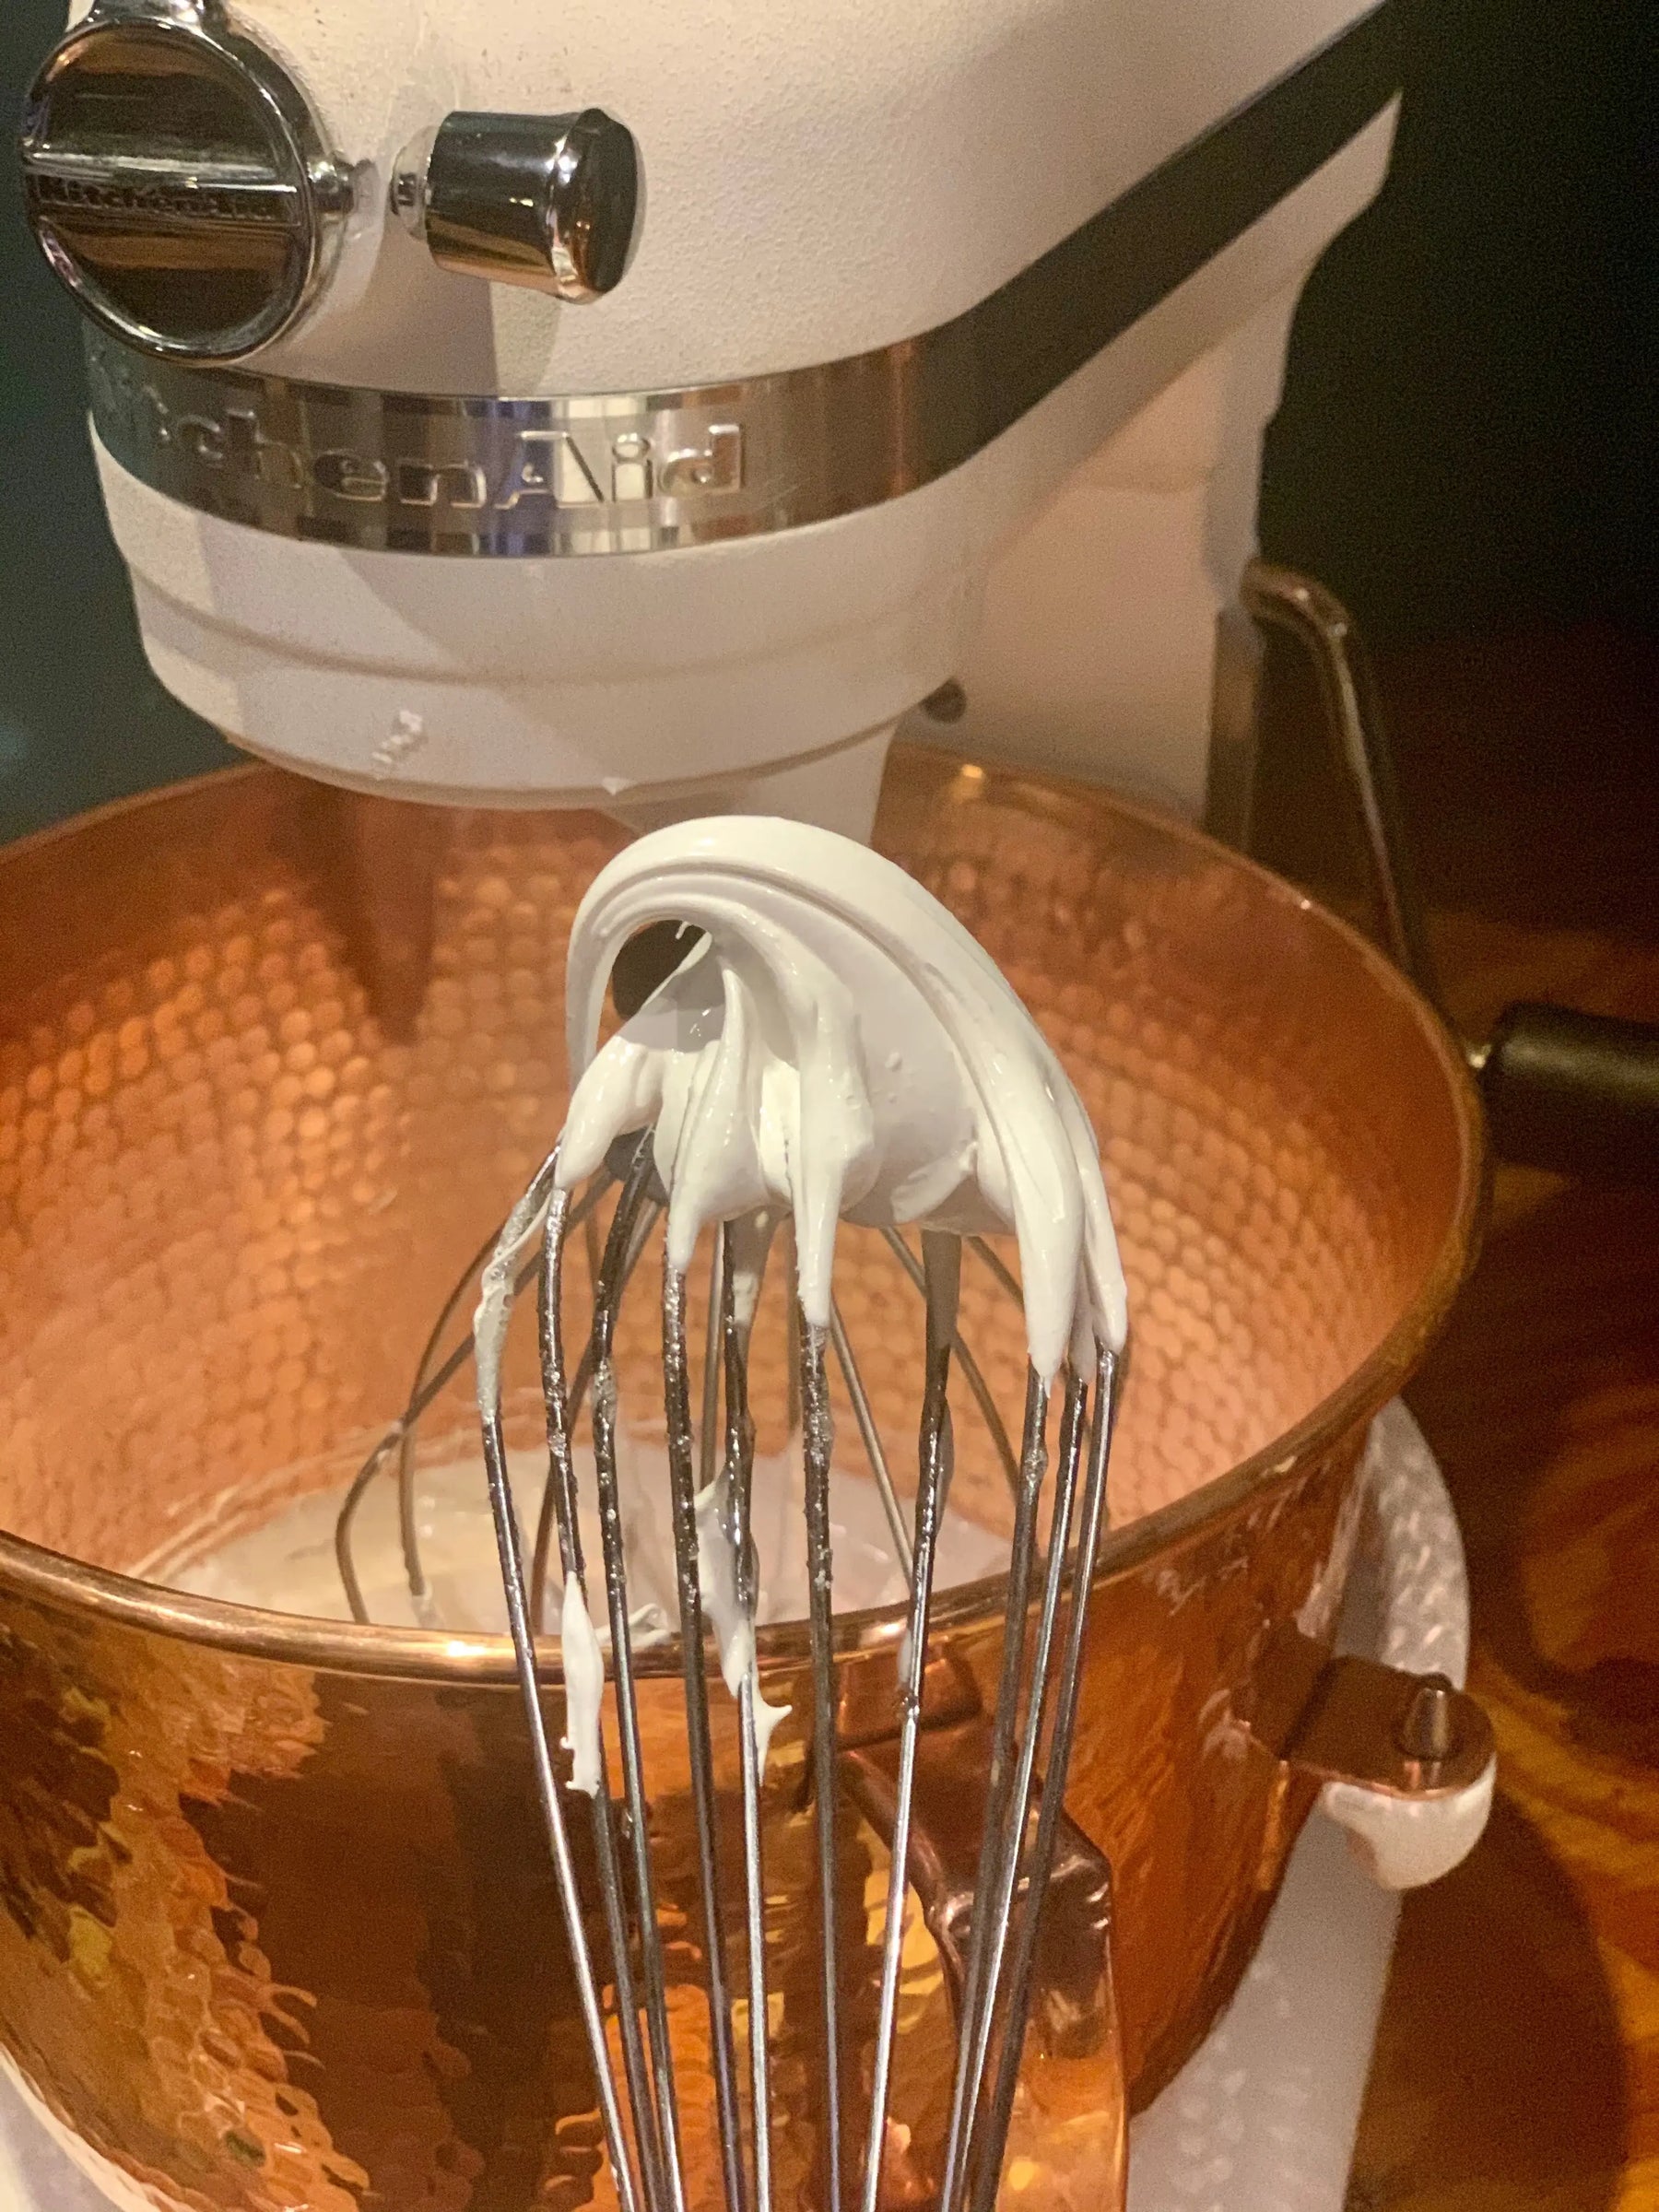 KitchenAid Professional 600 Copper Mixing Bowl - 6 quart